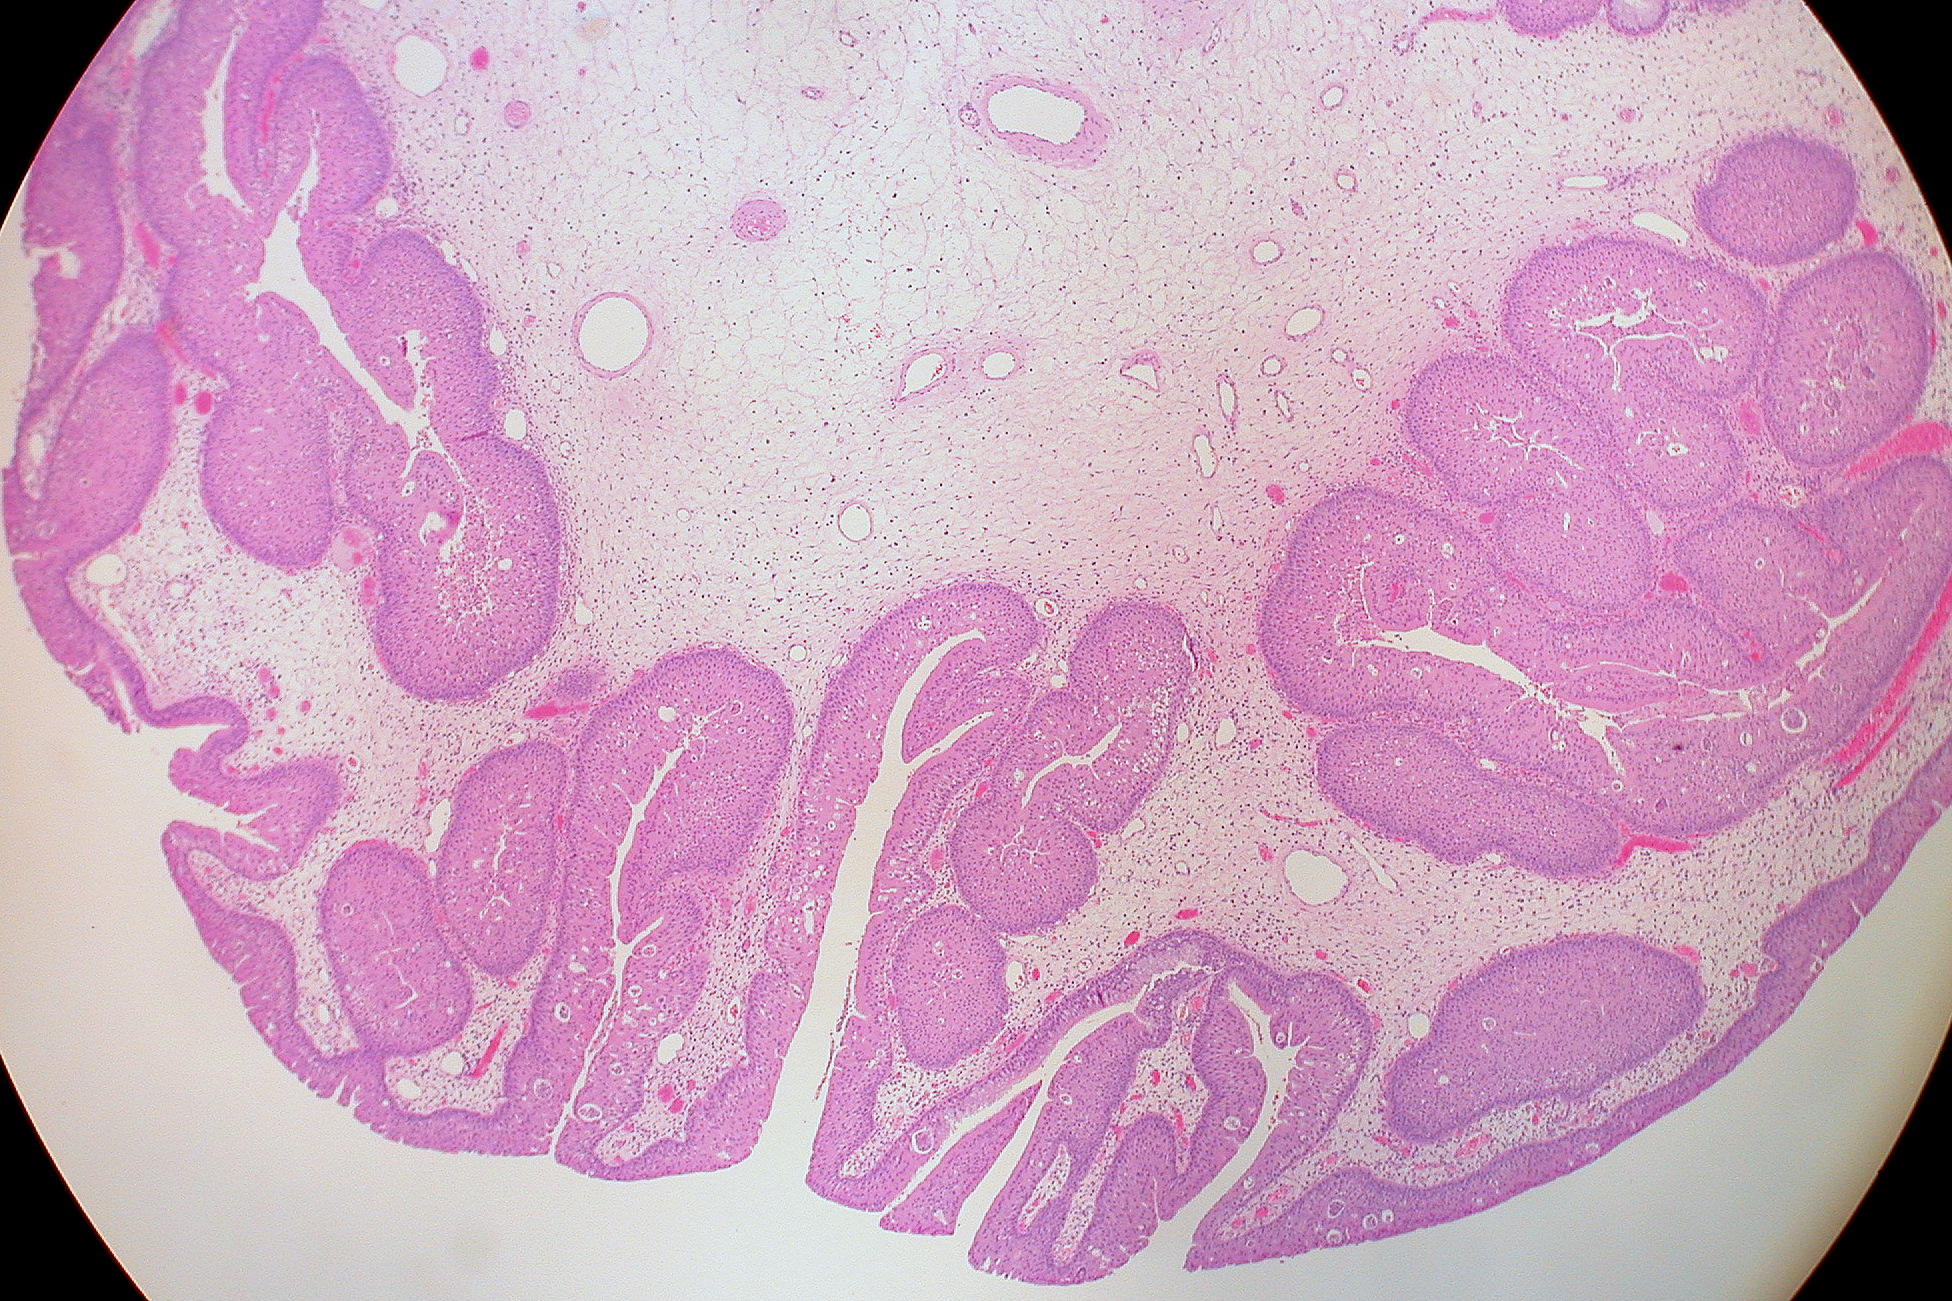 Oncocytic papilloma nasal, Oncocytic papilloma sinus